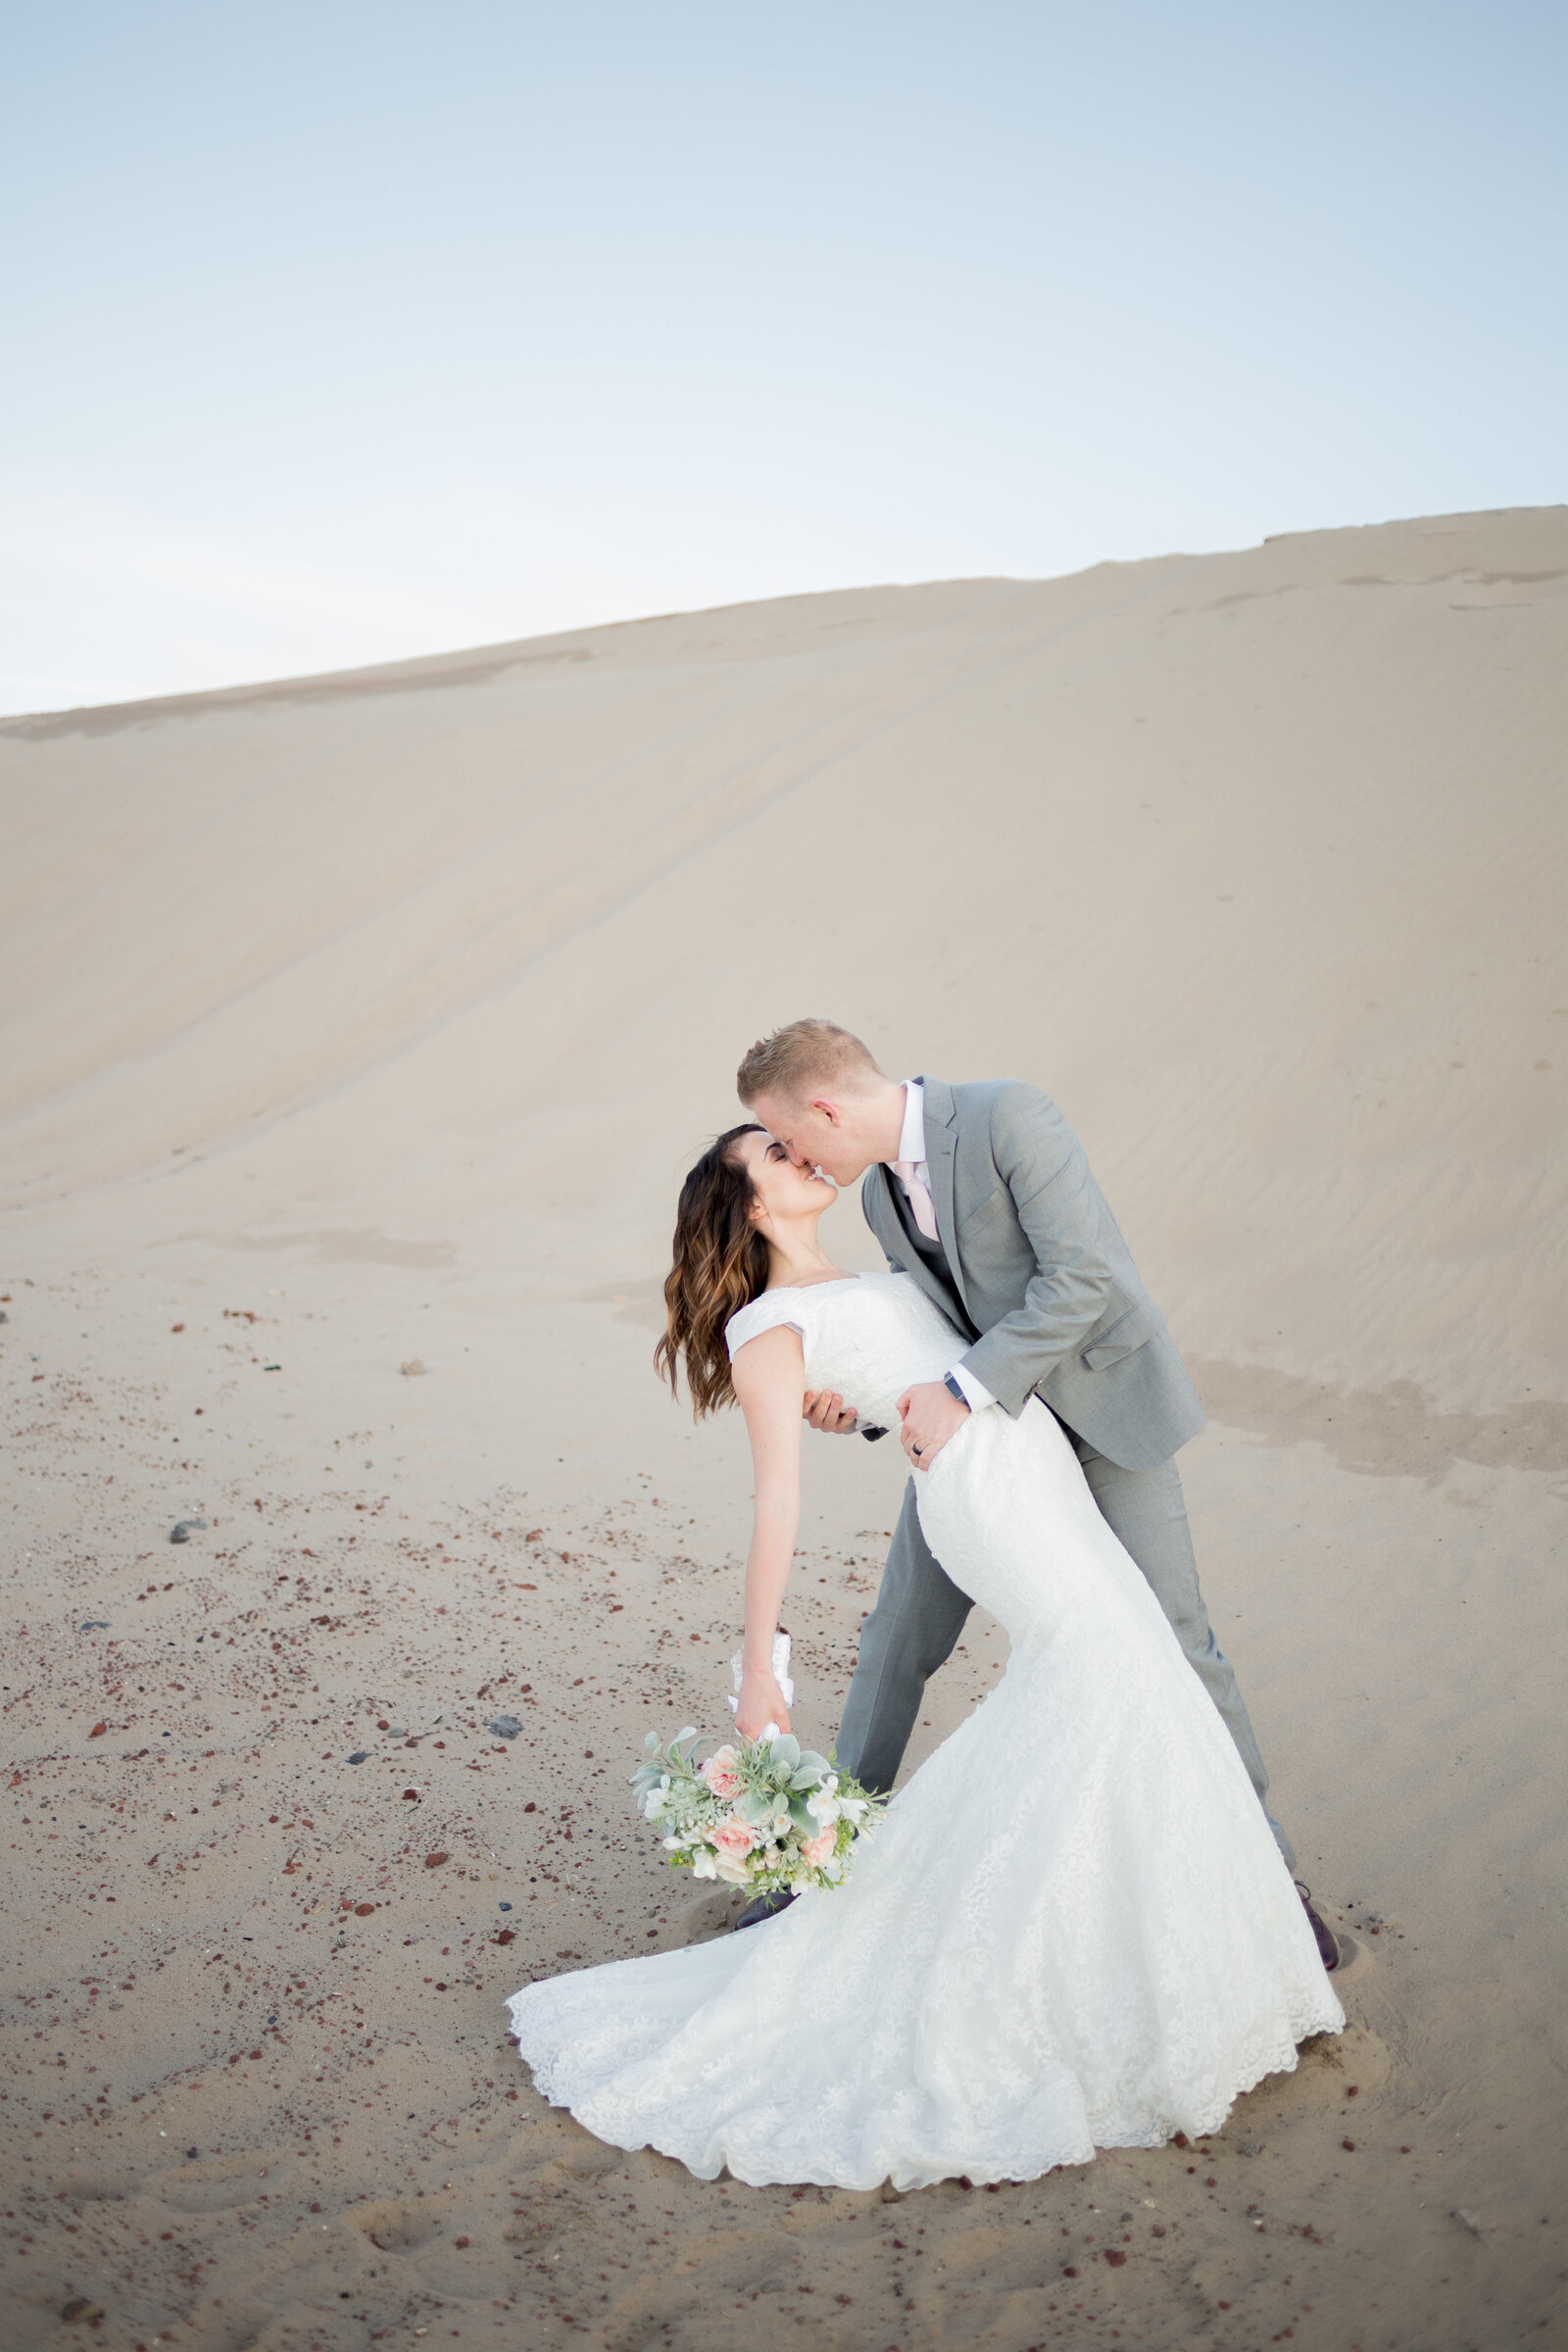 Washington Elopement Photographer captures bride and groom kissing during sand dune portraits